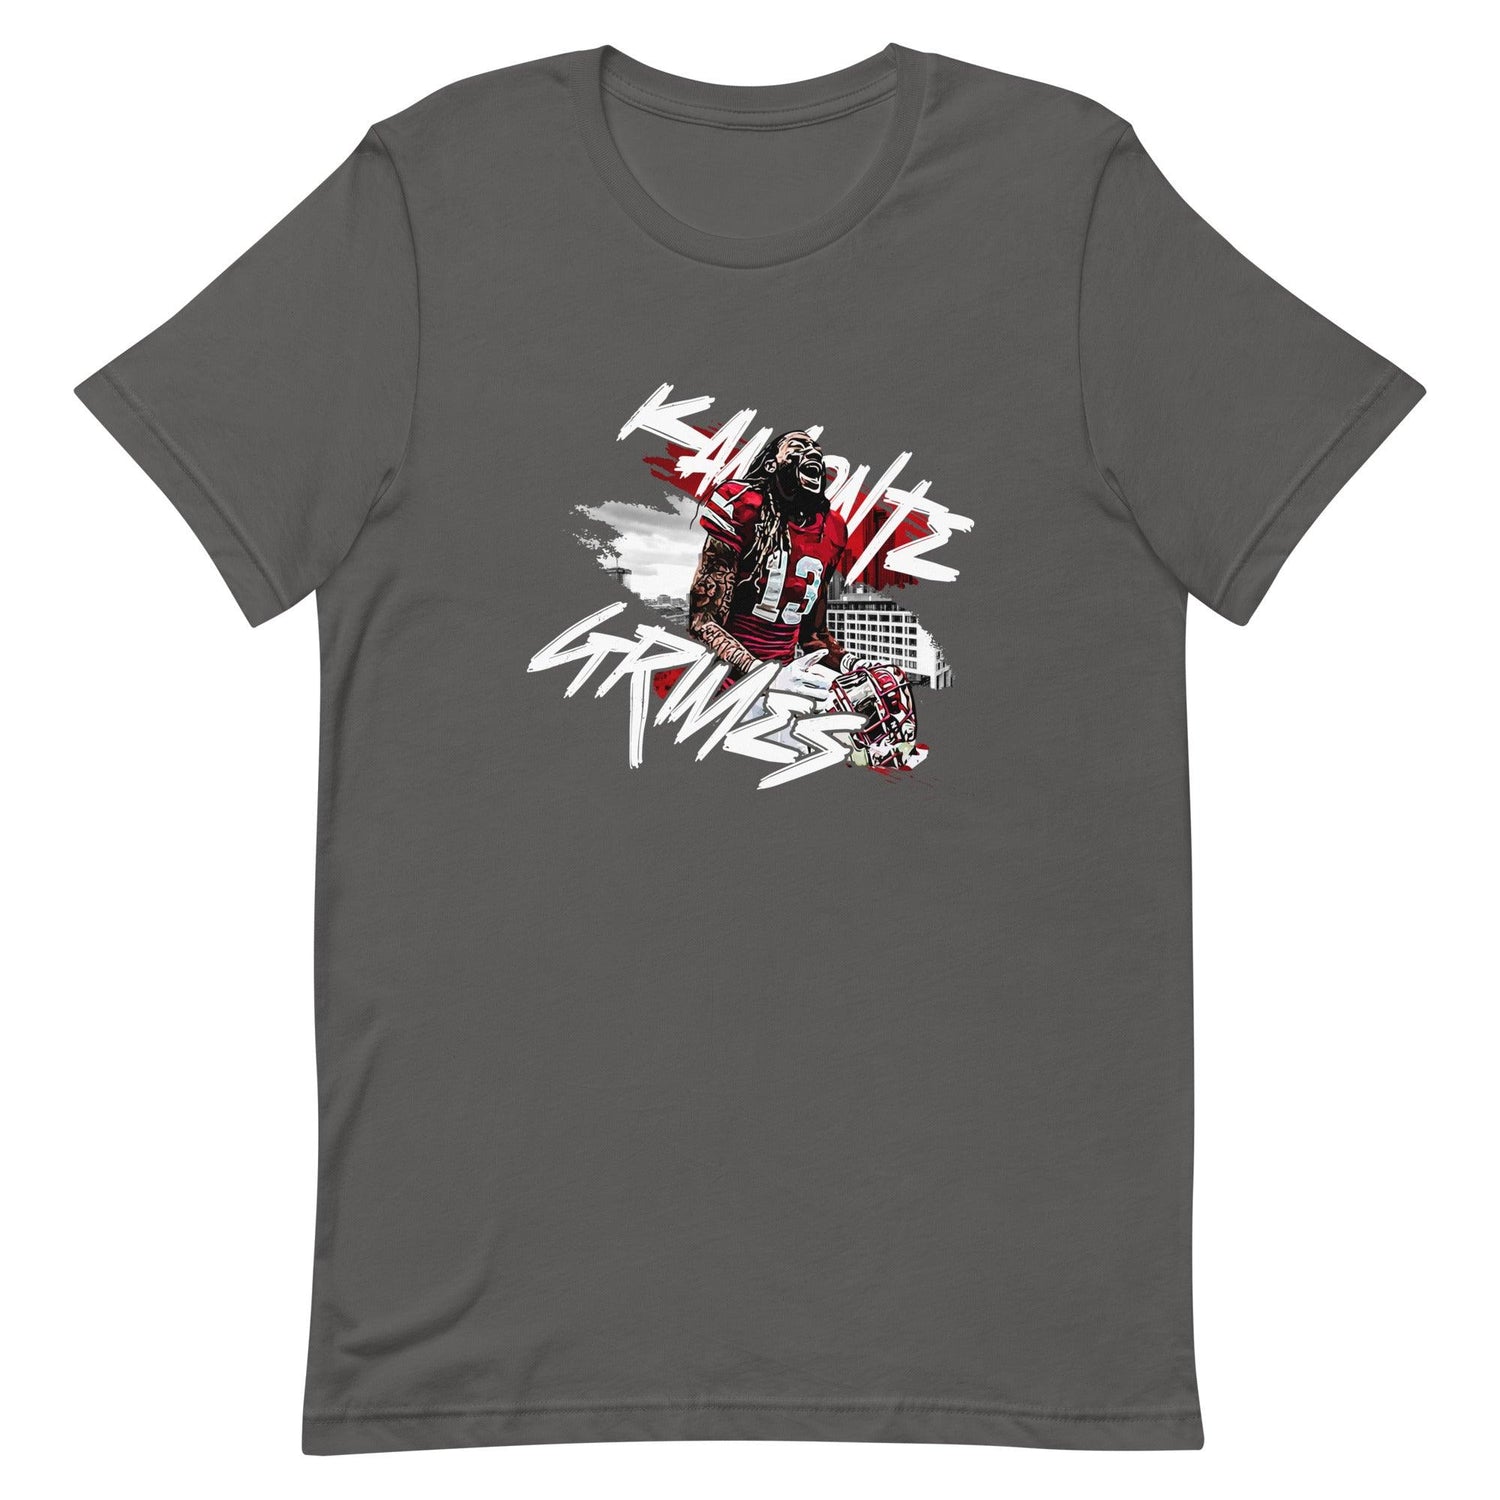 Kamonte Grimes "Gameday" t-shirt - Fan Arch